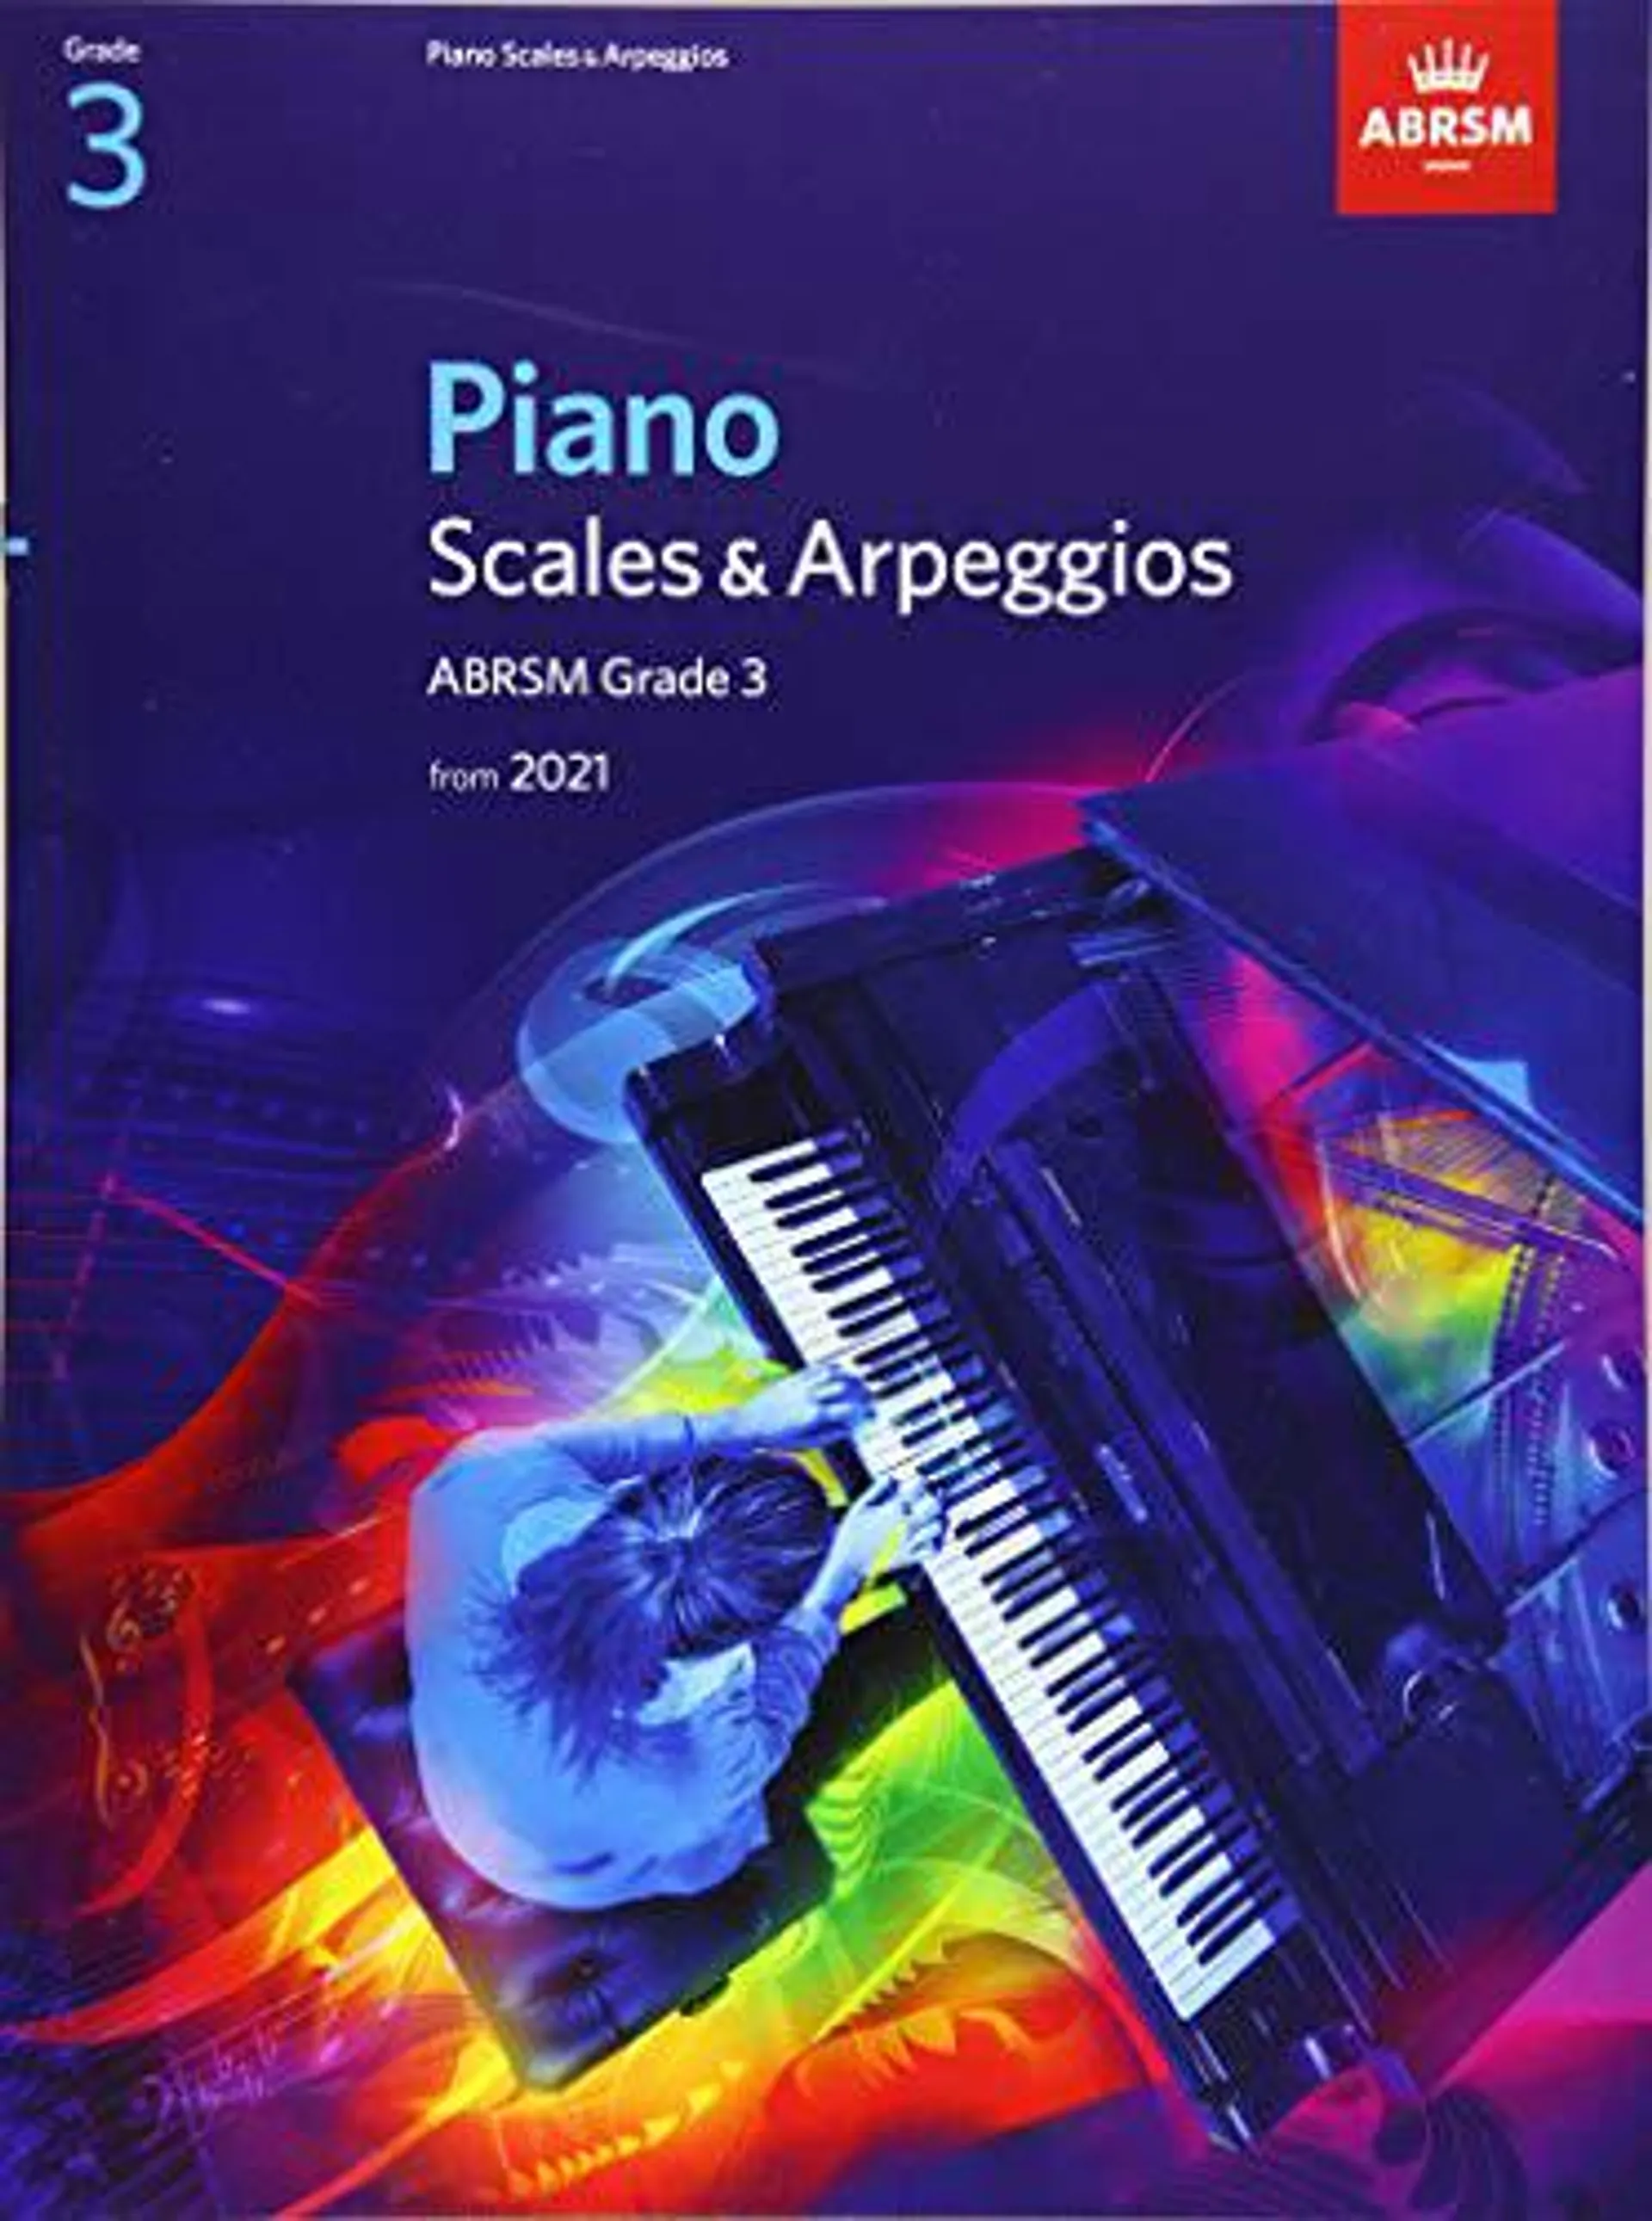 Piano Scales & Arpeggios, ABRSM Grade 3 by ABRSM